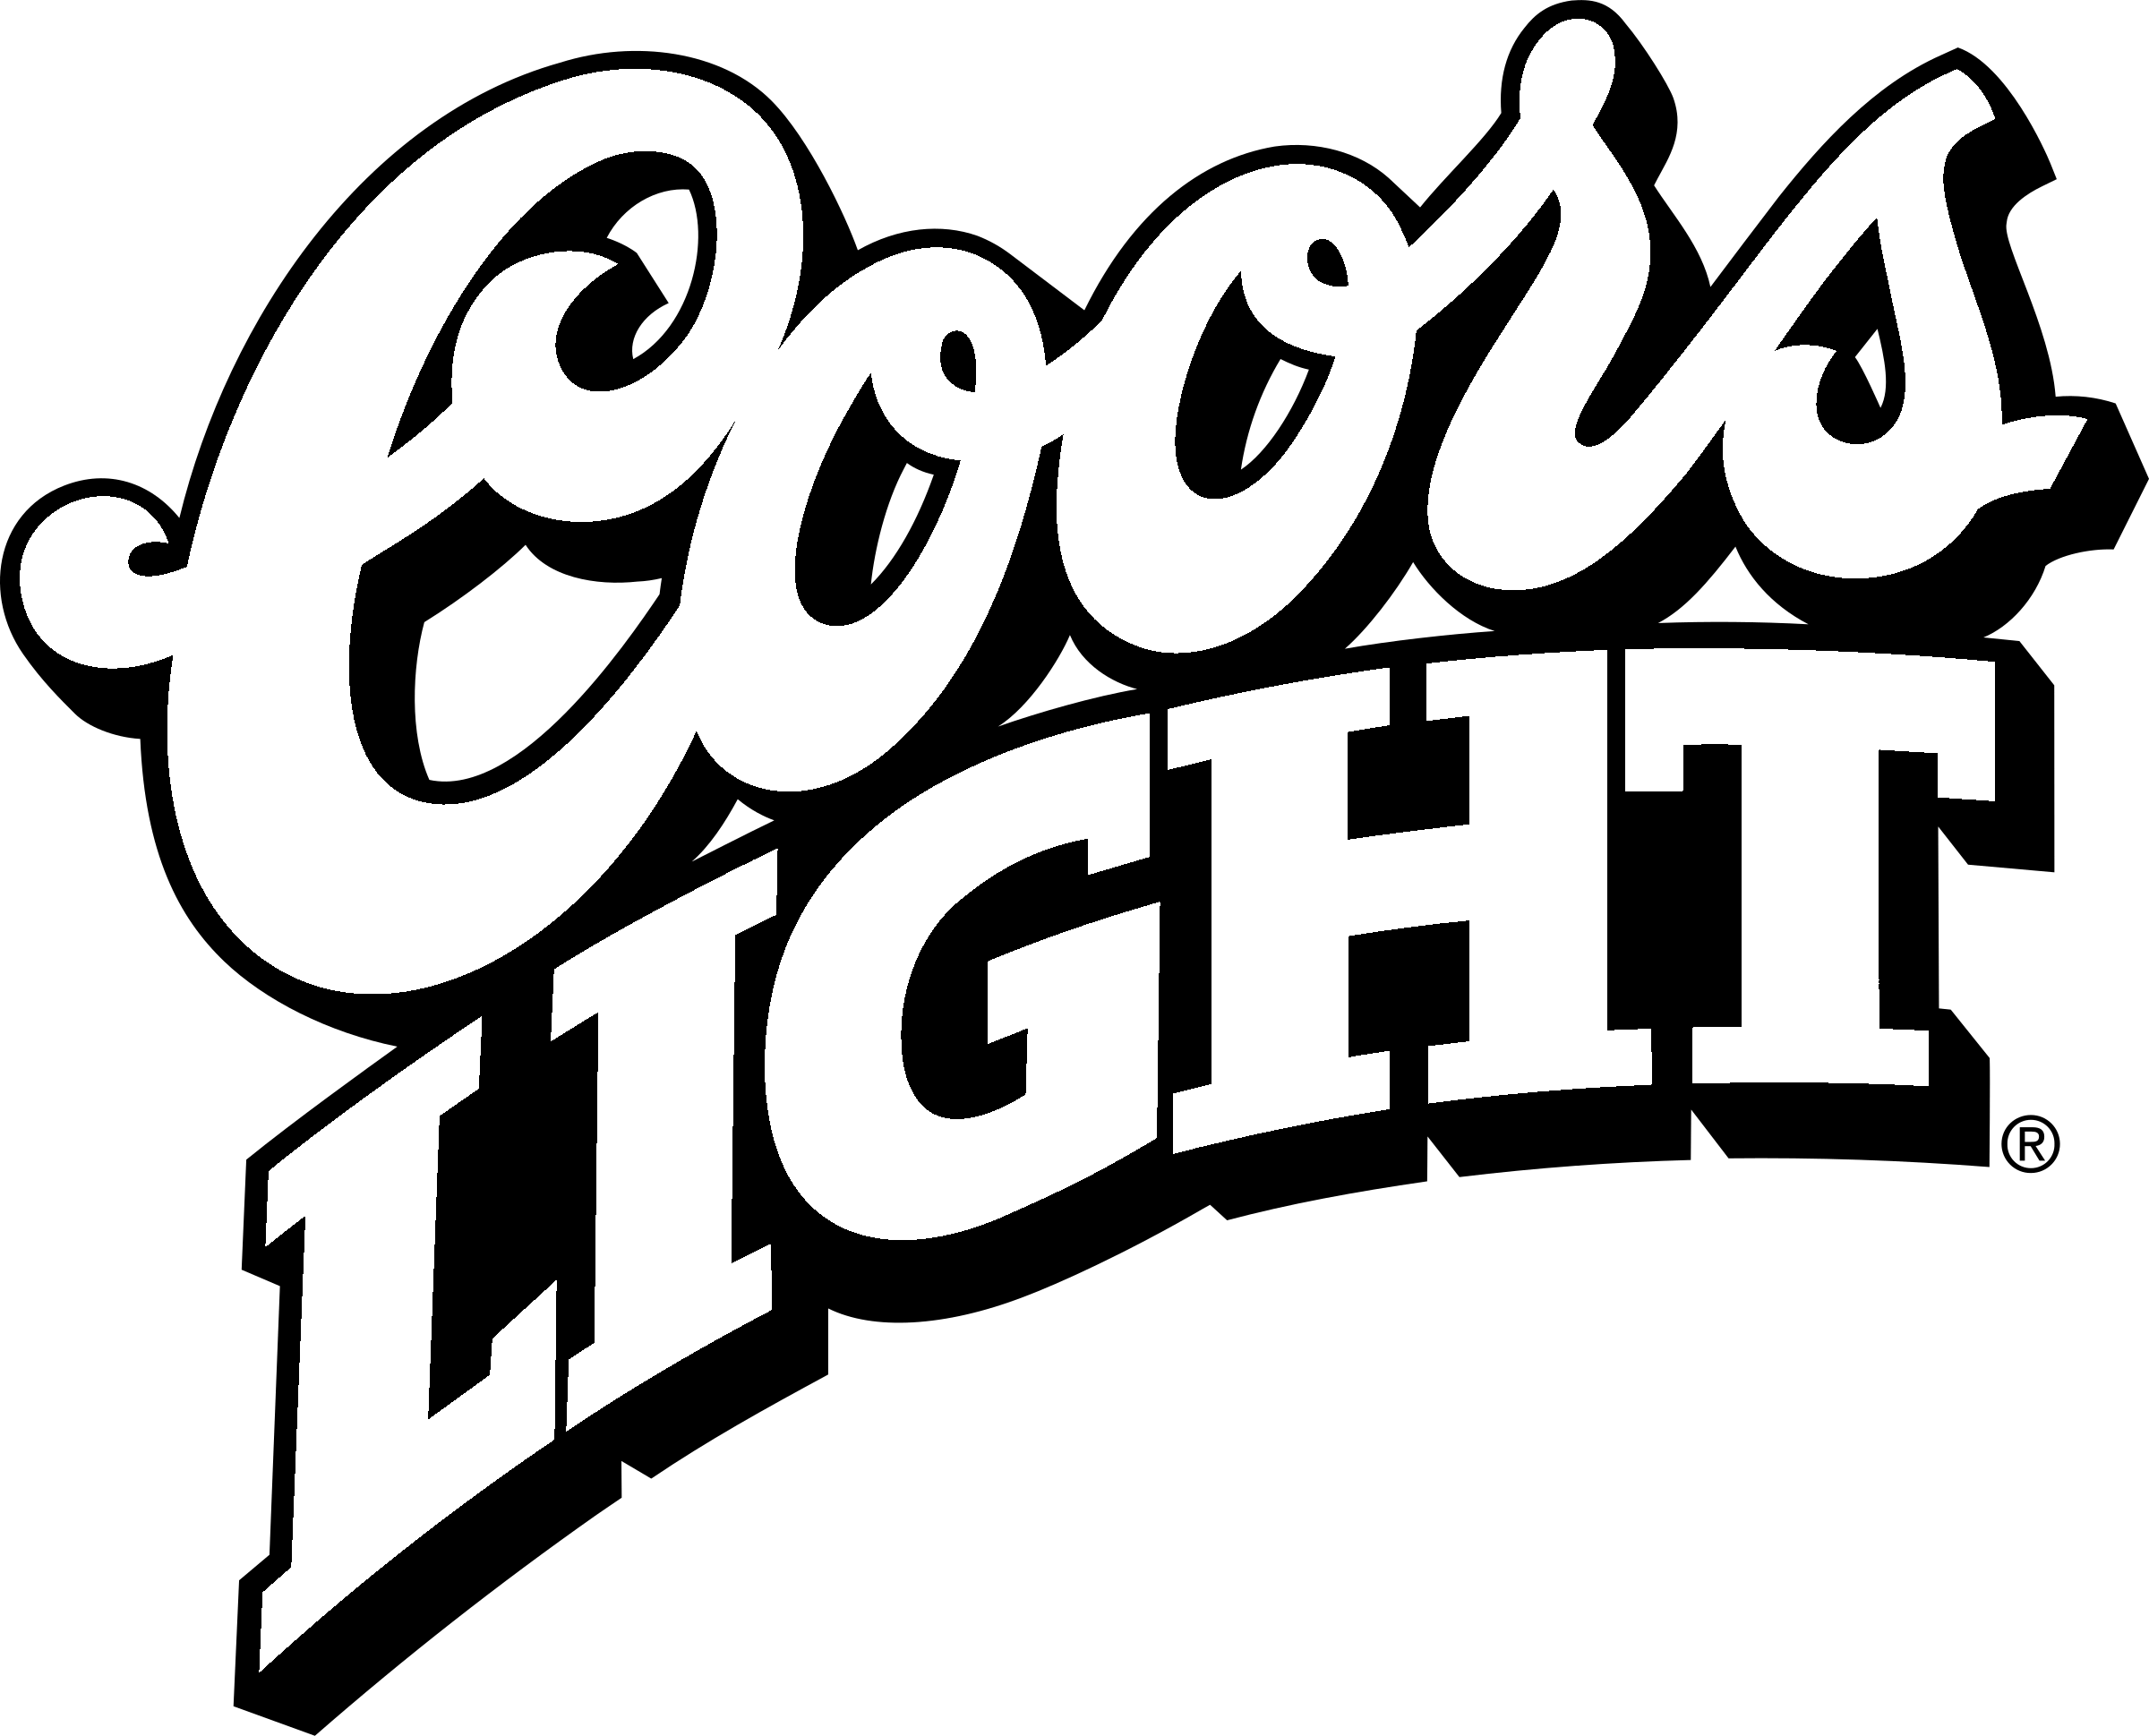 Black Coors Light Logo - Coors Light Logo PNG Transparent & SVG Vector - Freebie Supply